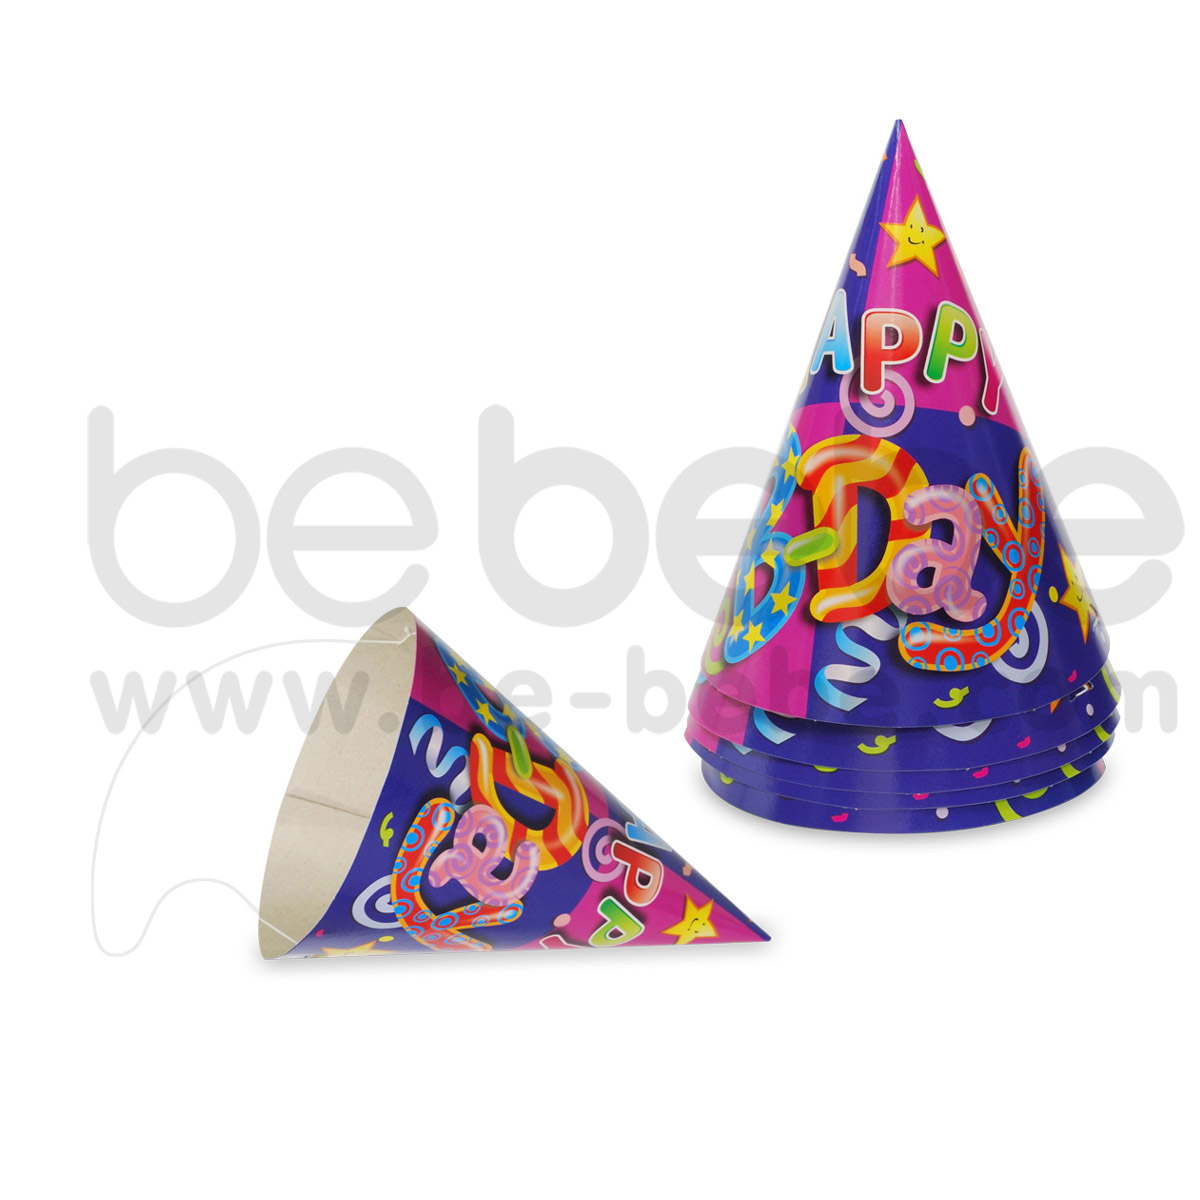 PARTY BUG : หมวกโคนปาร์ตี้ 6 inch.x 12 Packs คุณภาพสูง* ดีไซน์สวยงาม ได้มาตรฐานEN71*ปลอดภัย ECO*เป็นมิตรกับสิ่งแวดล้อม